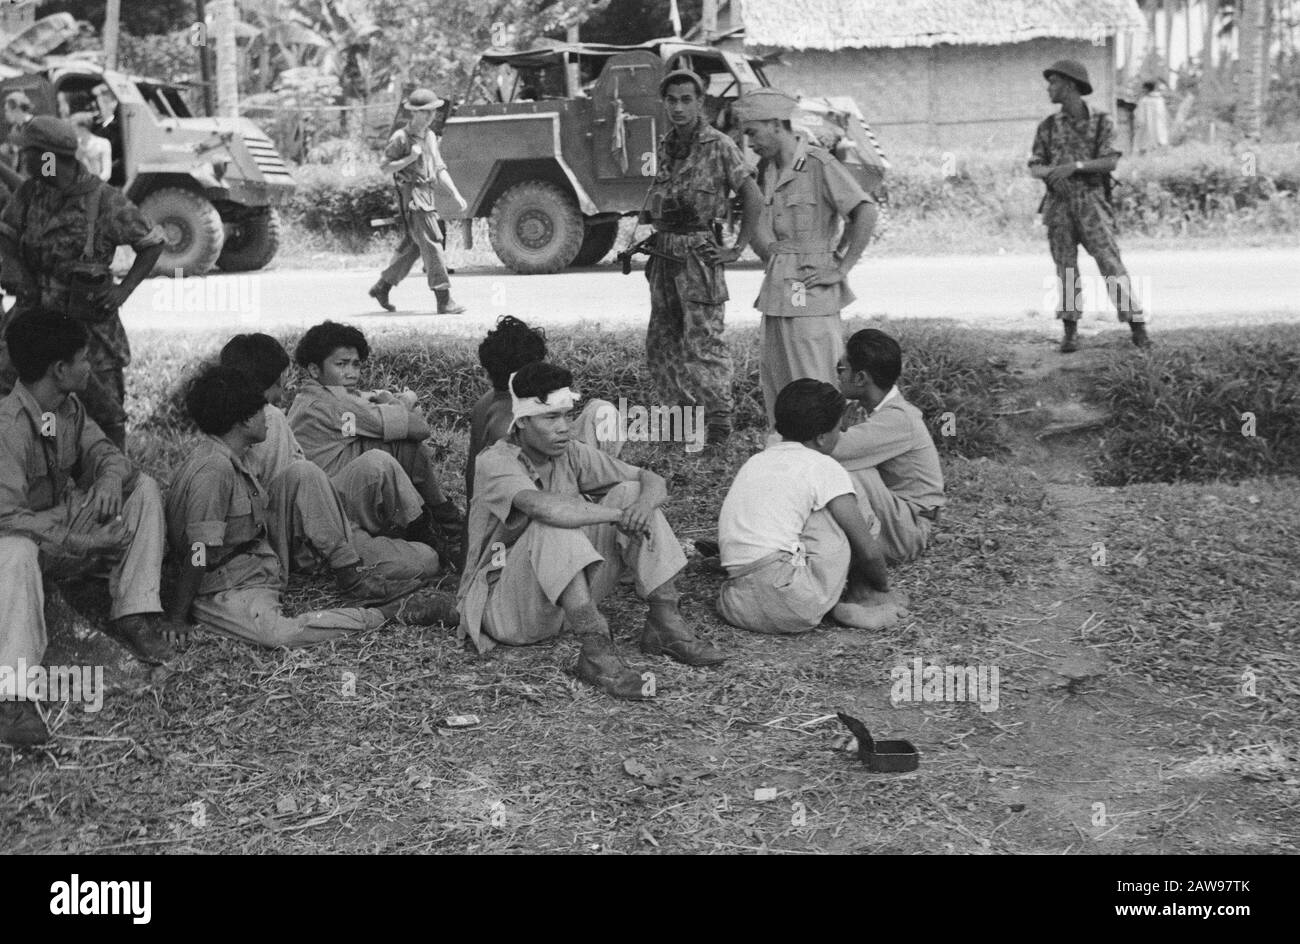 Loeboek Pakem and Baoengan  Medan in filling Baoengan our troops made some prisoners Date: July 29, 1948 Location: Indonesia, Dutch East Indies, Sumatra Stock Photo